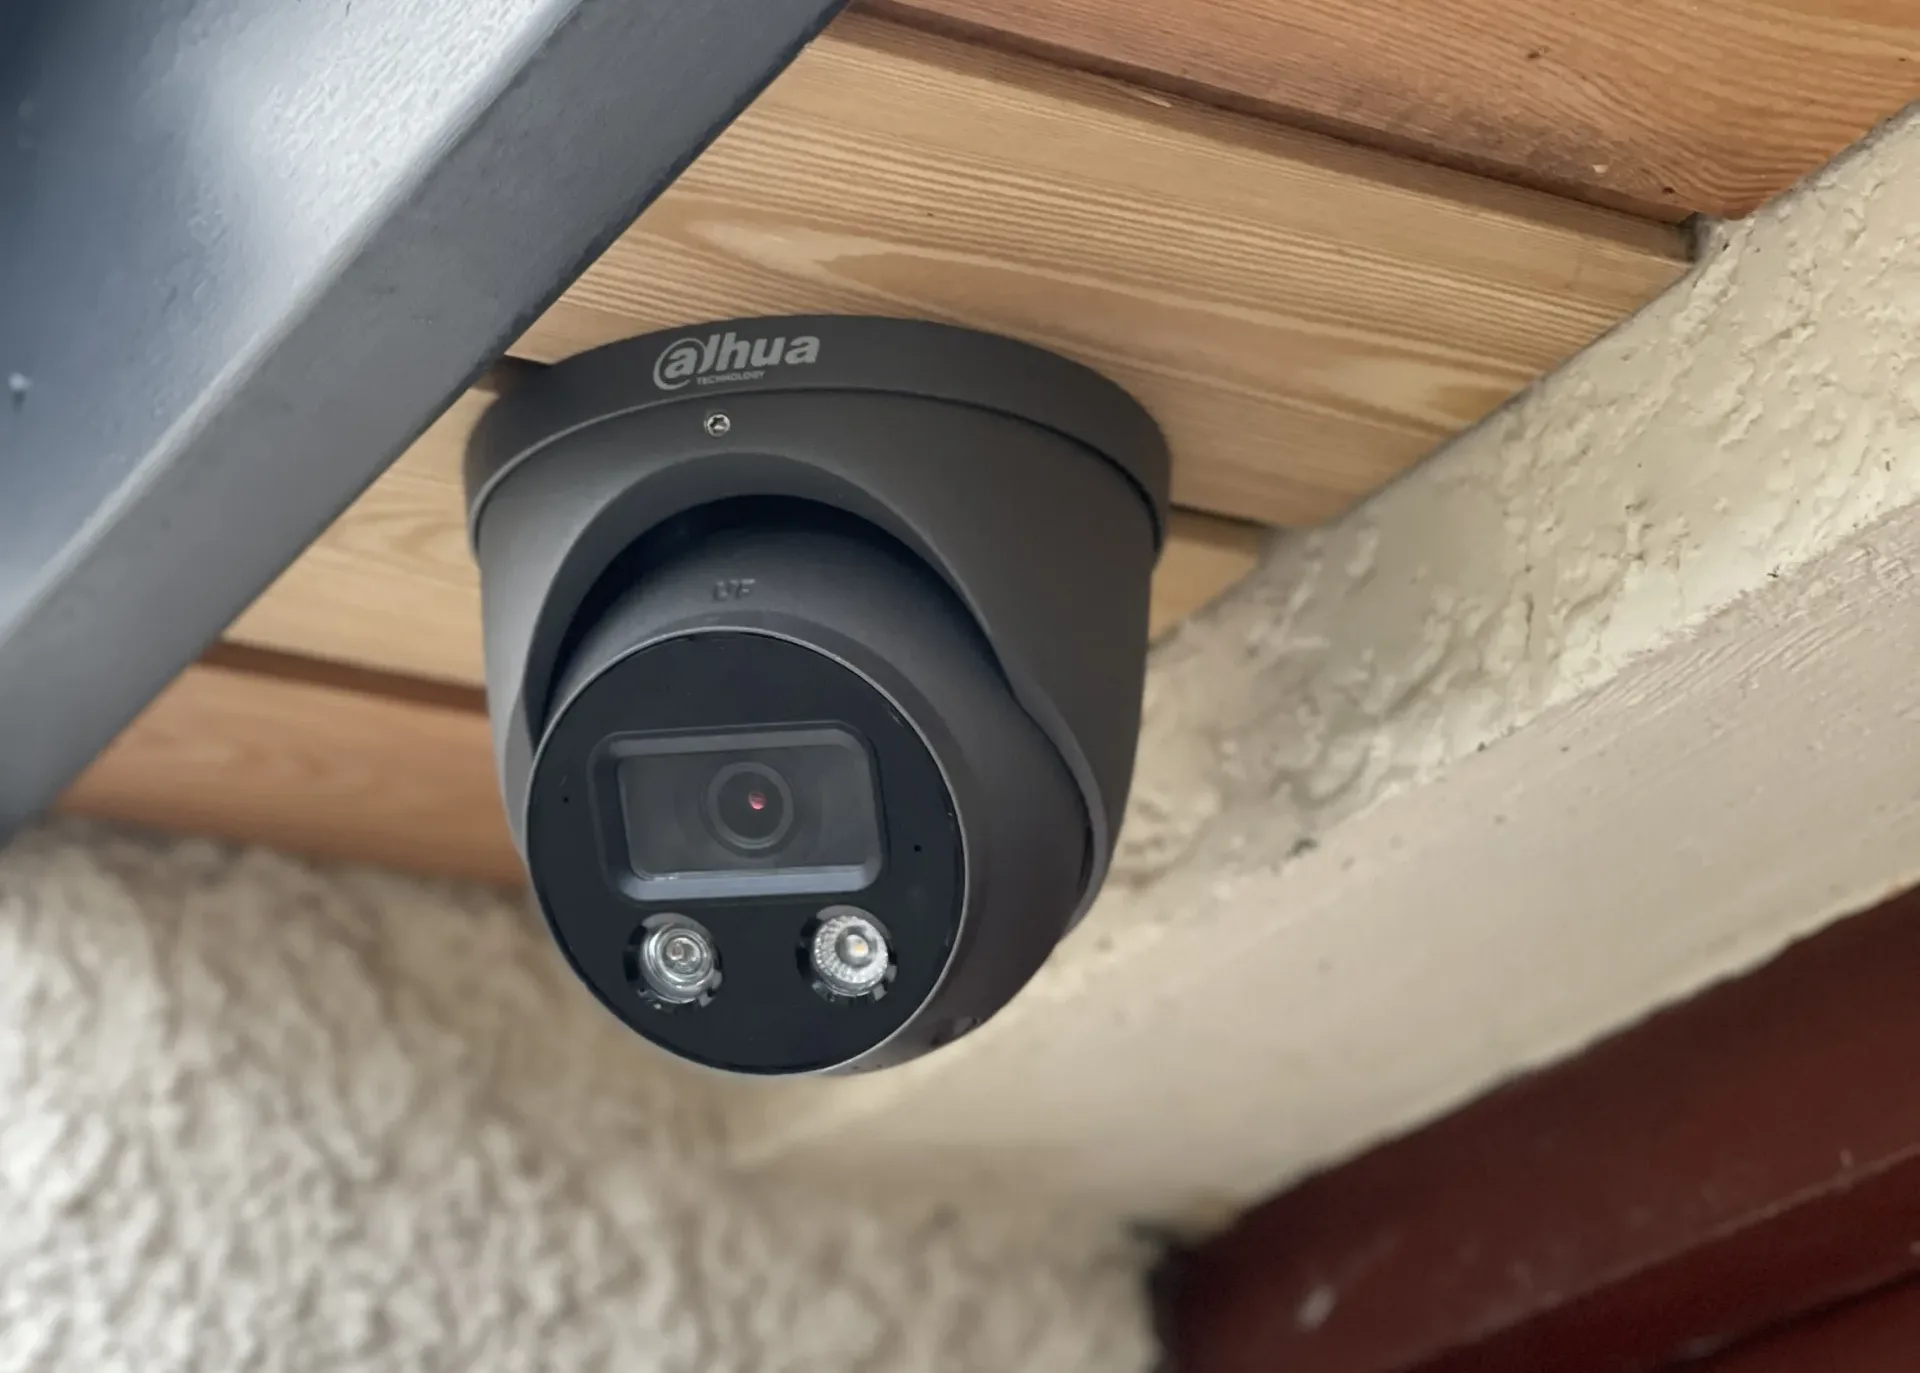 Dahua CCTV camera installed by Epixx Systems